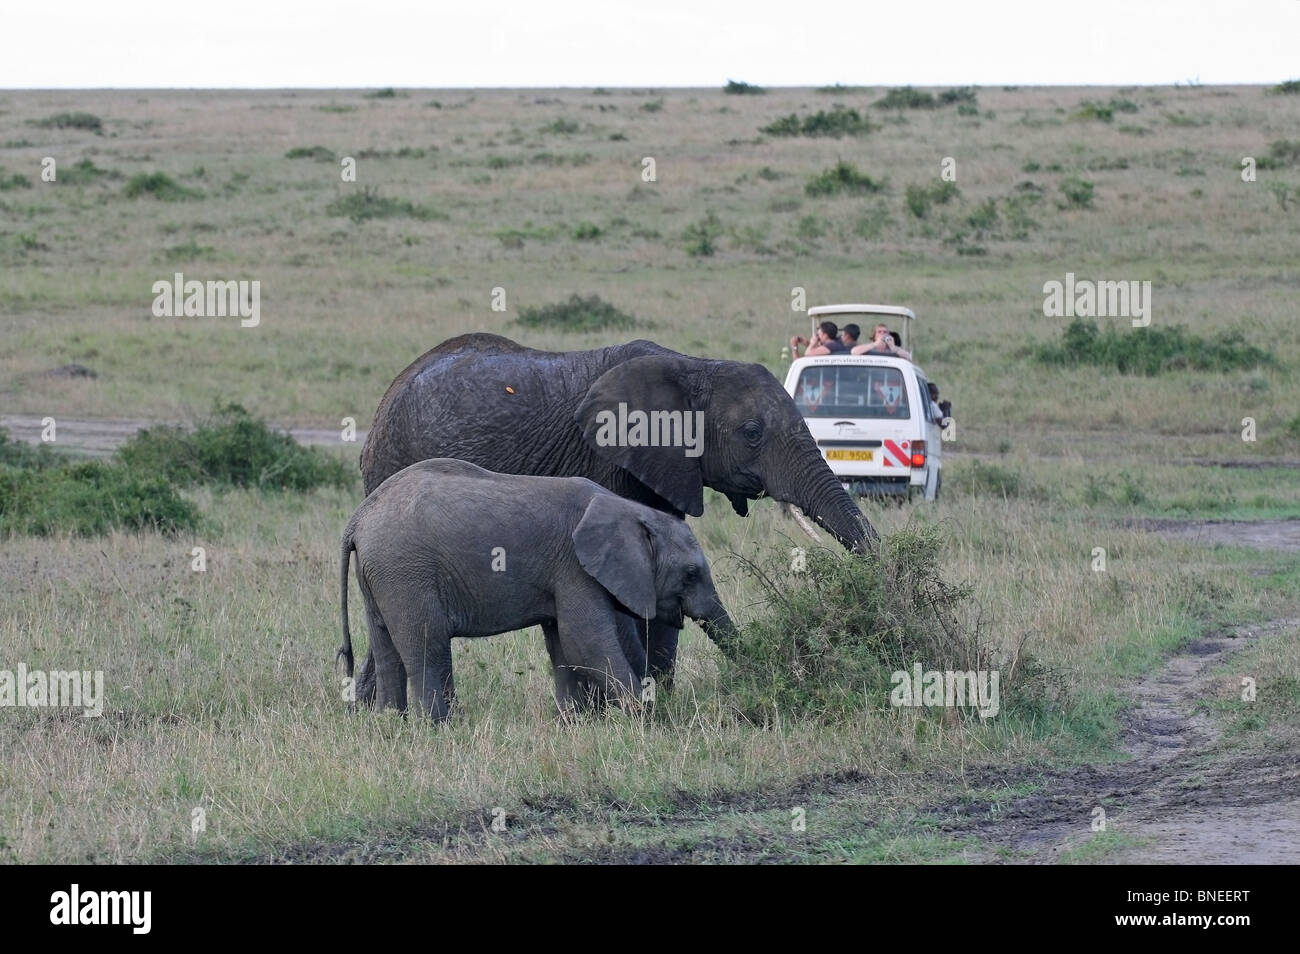 African Elephants grazing in the grasslands of Masai Mara National Reserve, Kenya East Africa Stock Photo